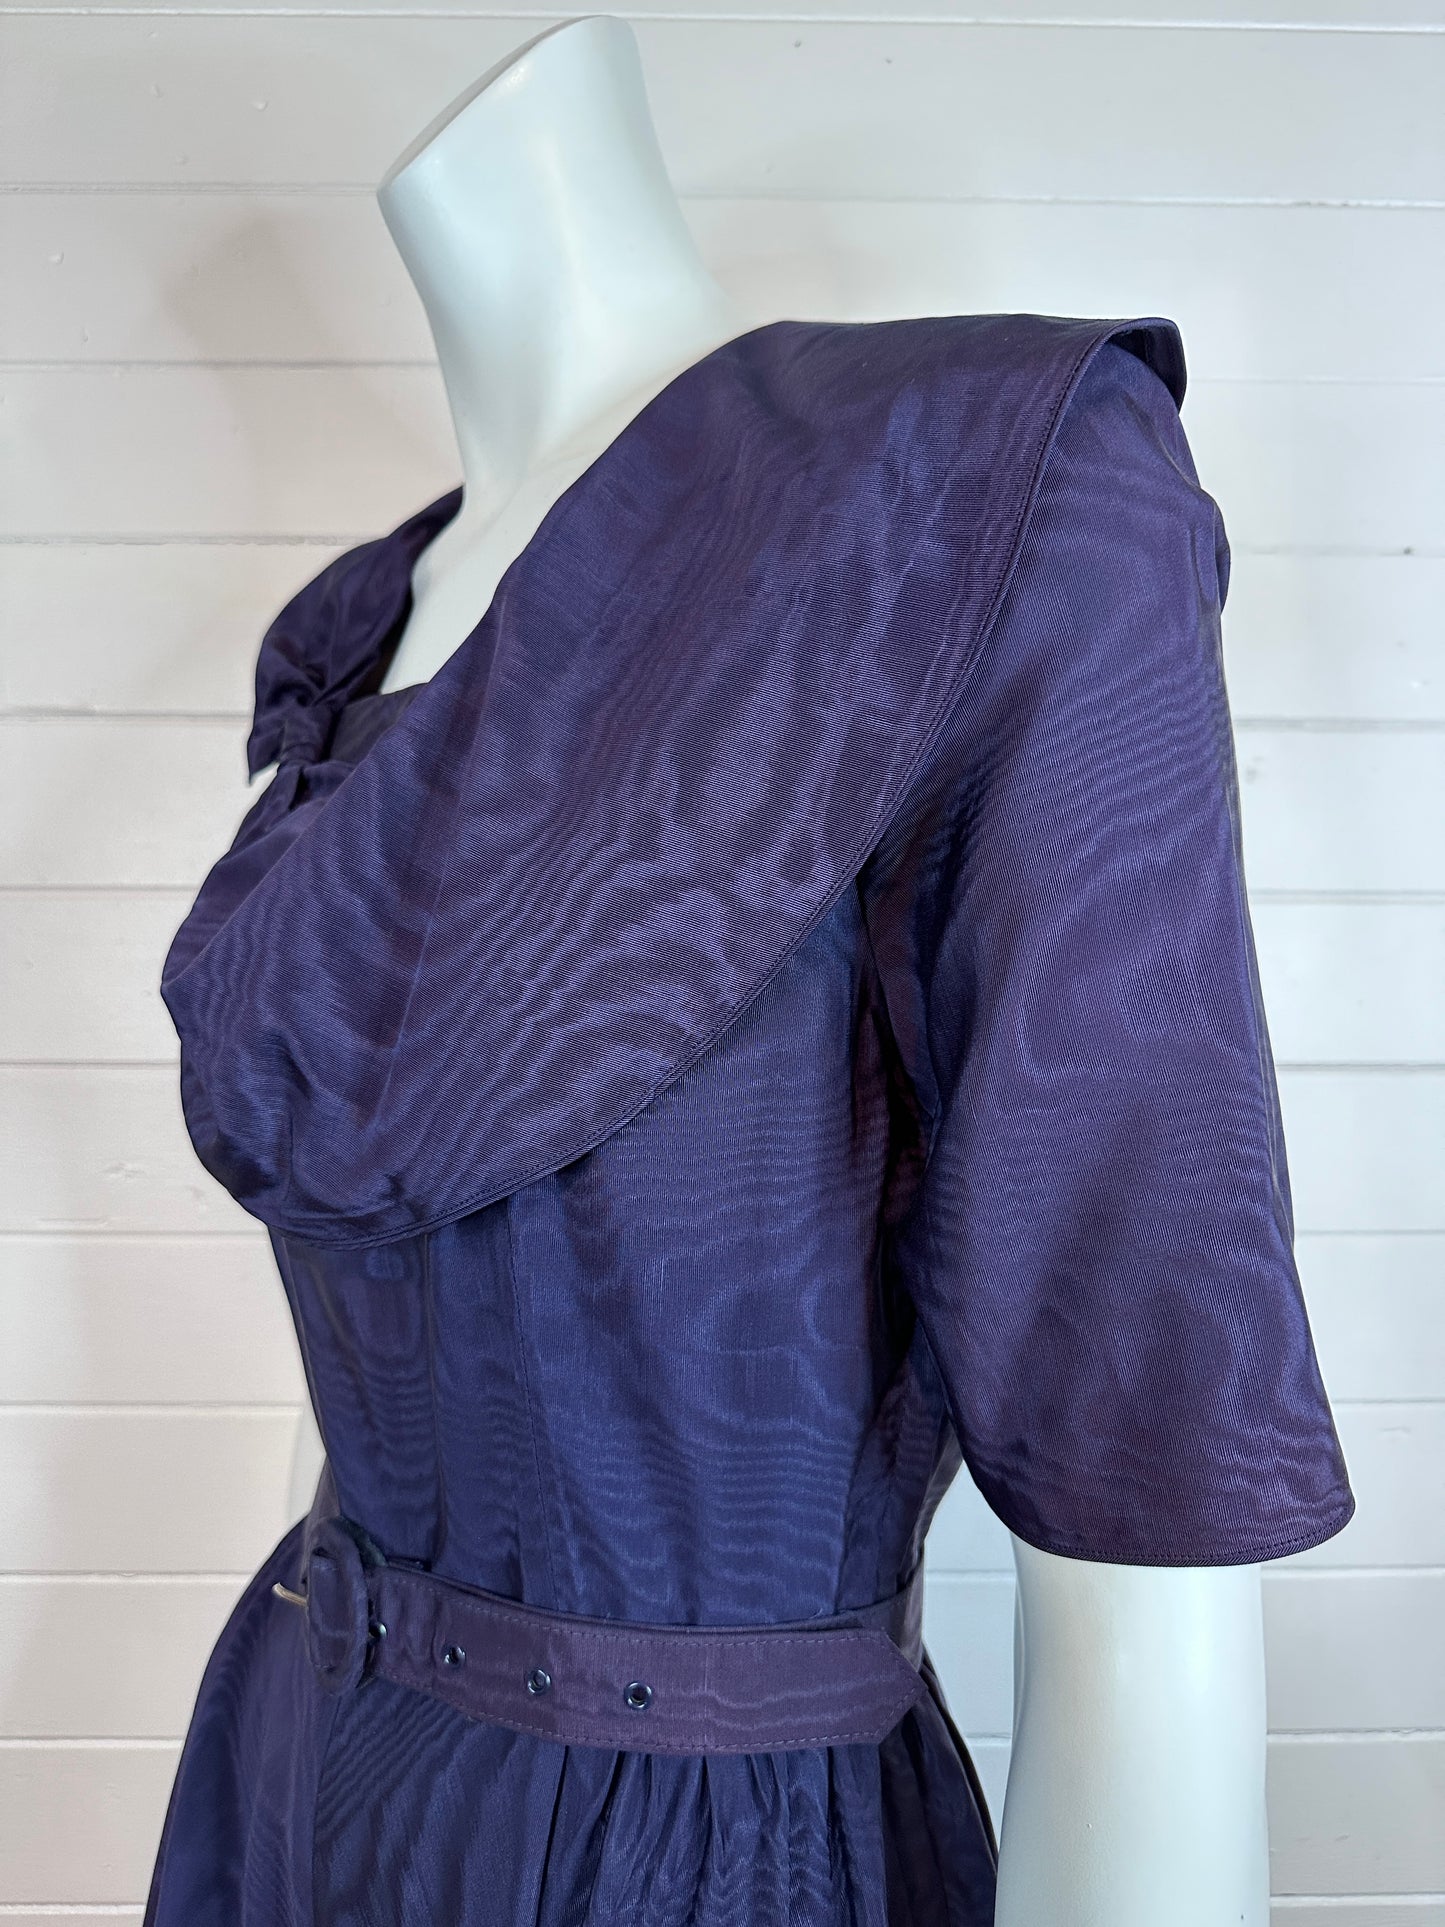 1940's Purple Moiré Taffeta Dress (M)